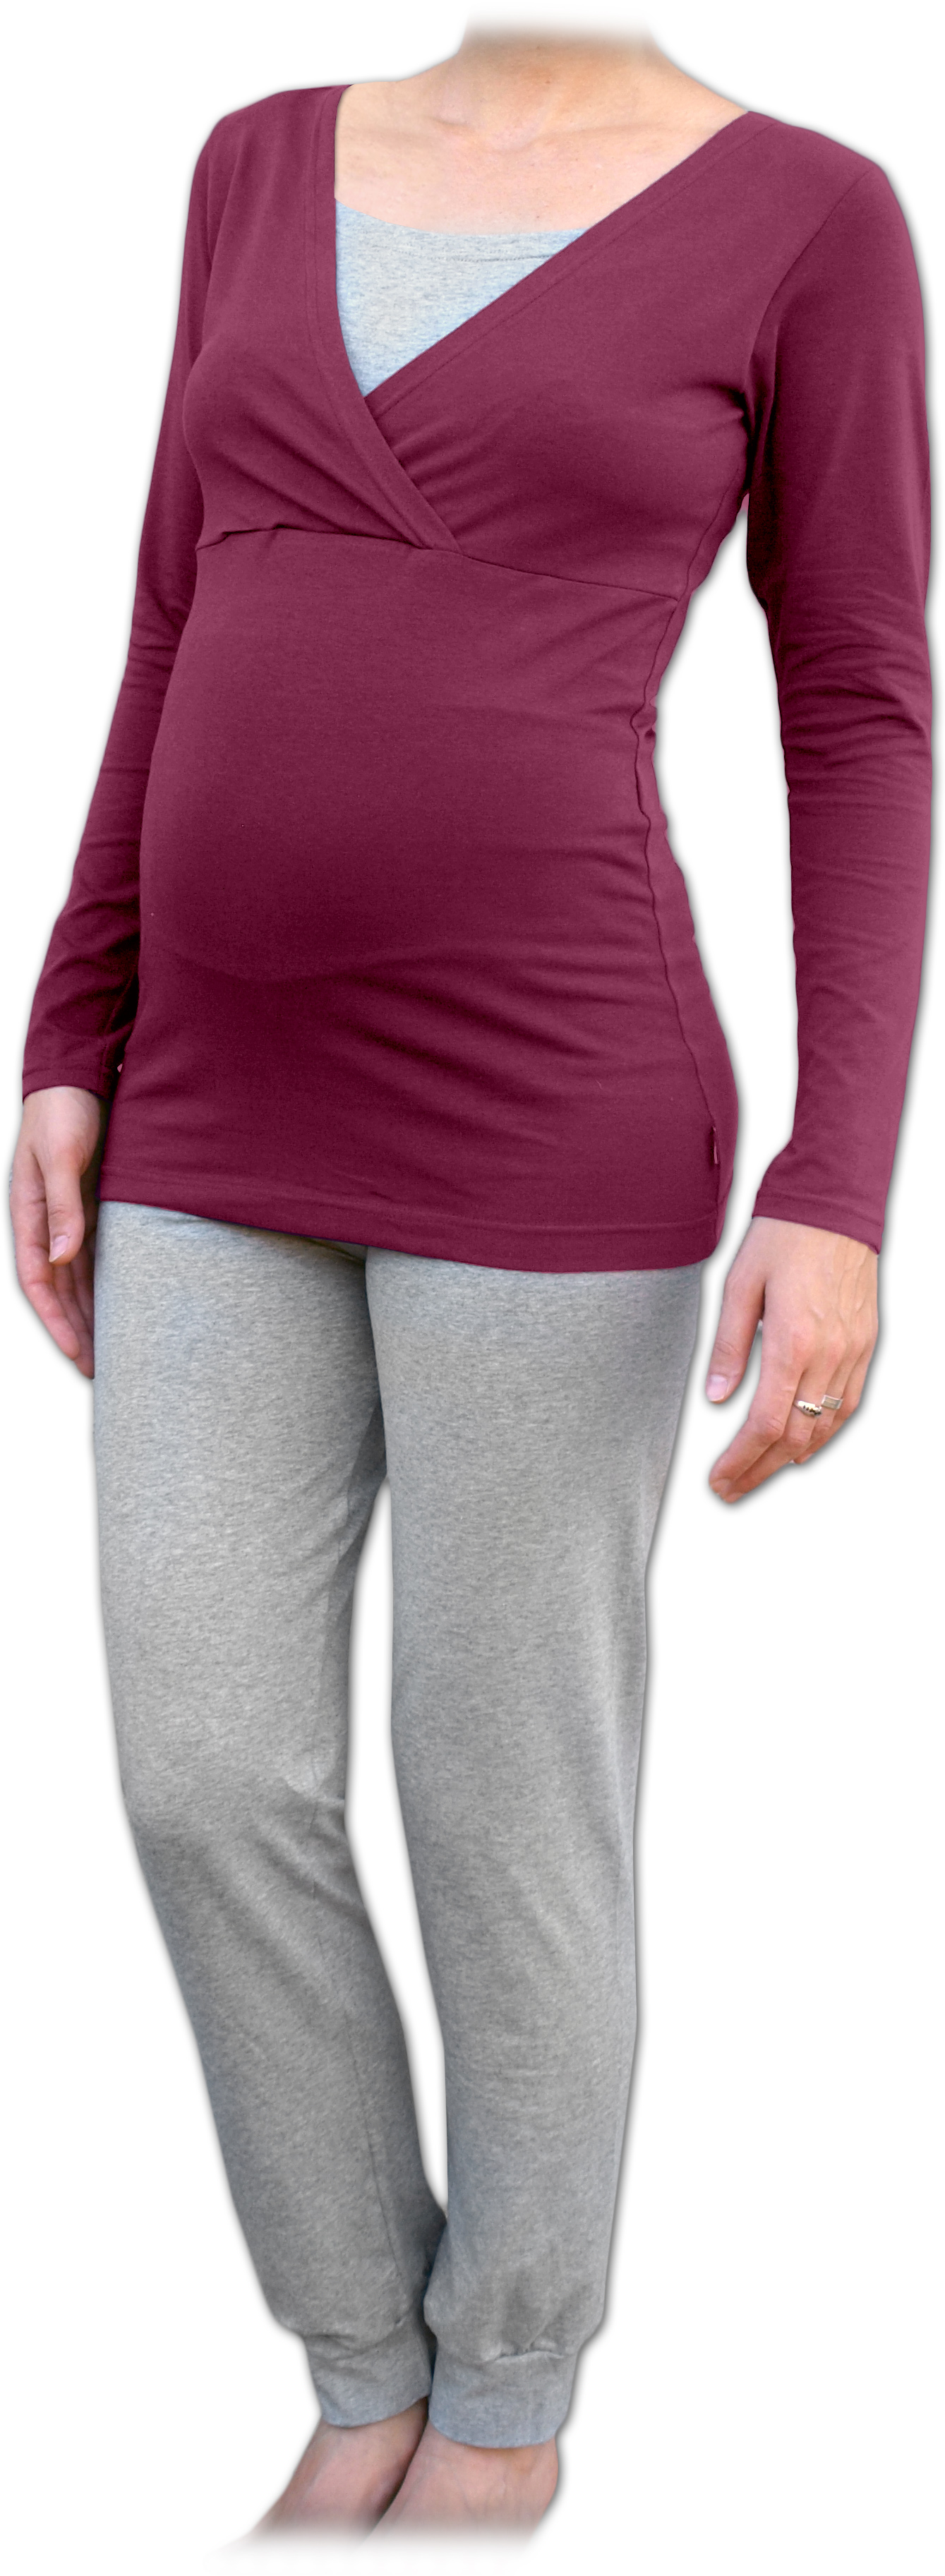 Tehotenské a dojčiace pyžamo, dlhé, cyklamen + sivý melír